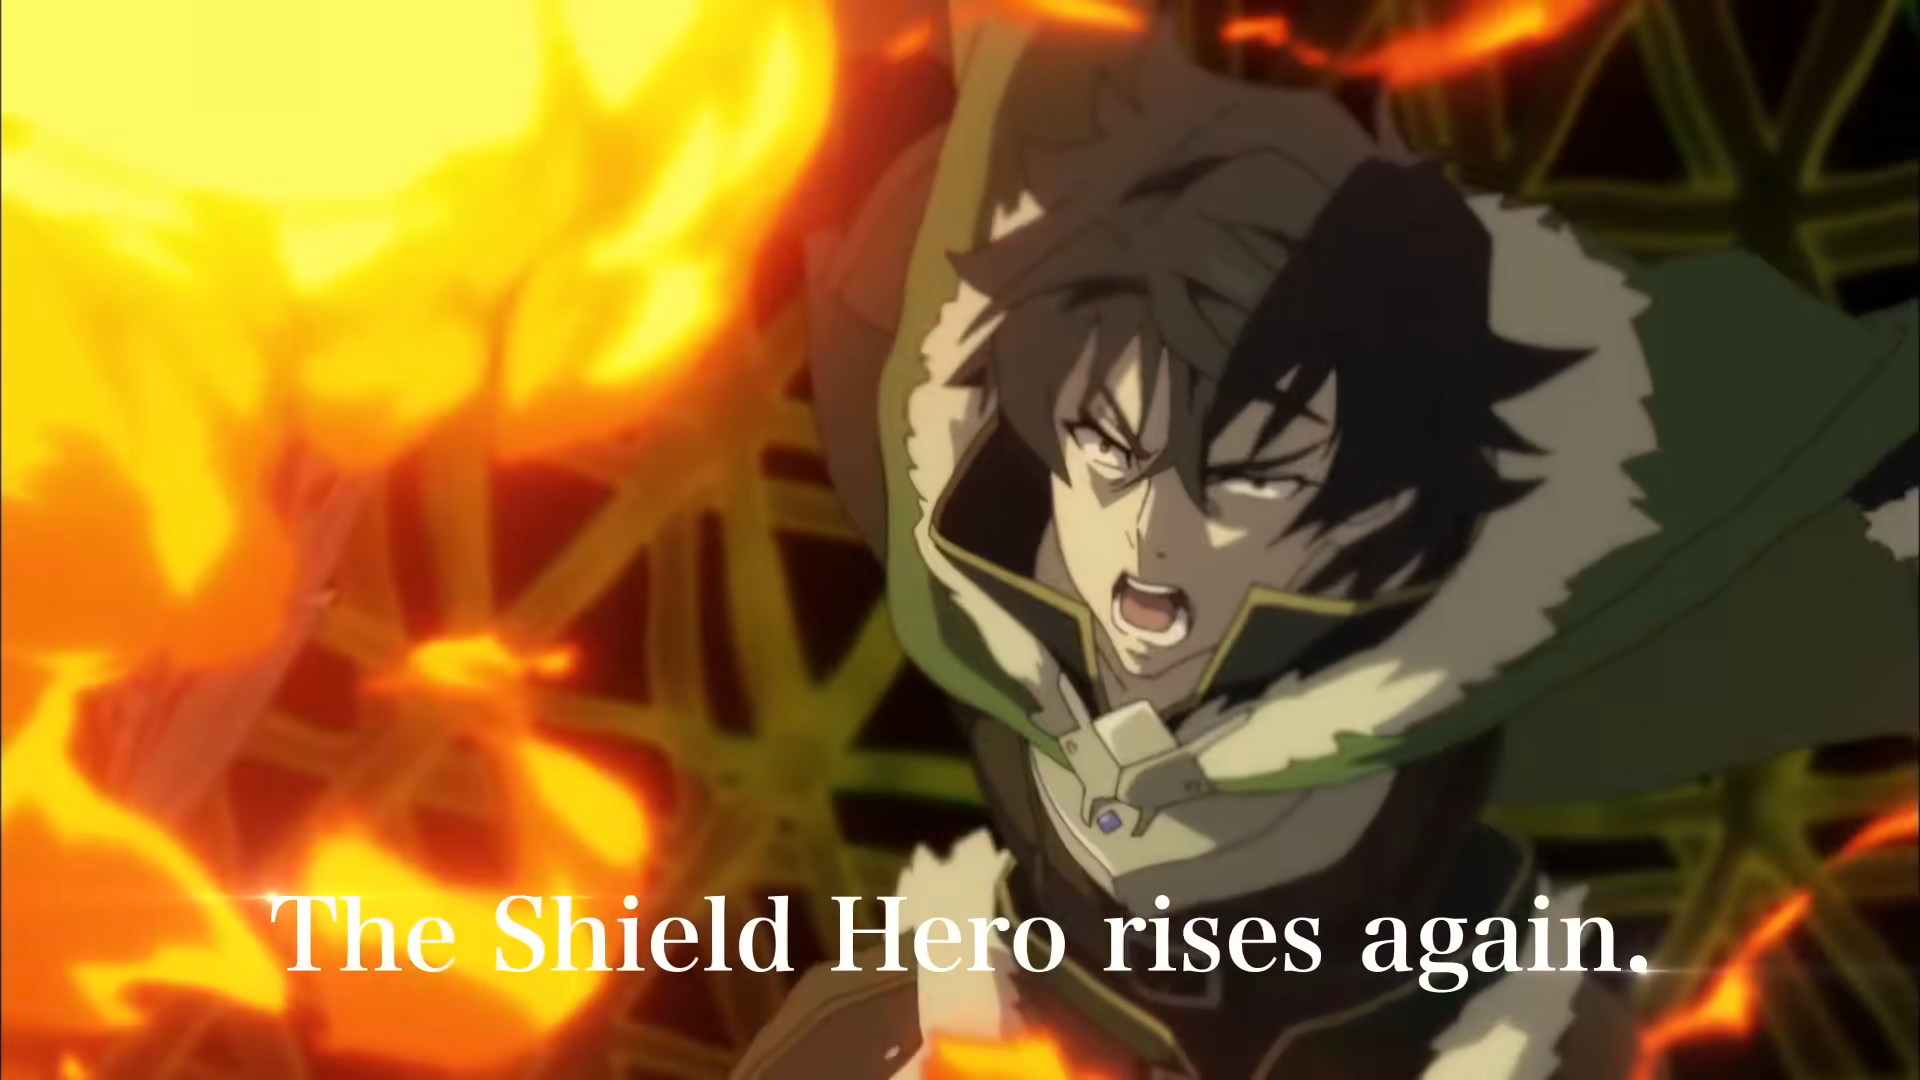 The Rising of the Shield Hero 3 vai ter 12 episódios